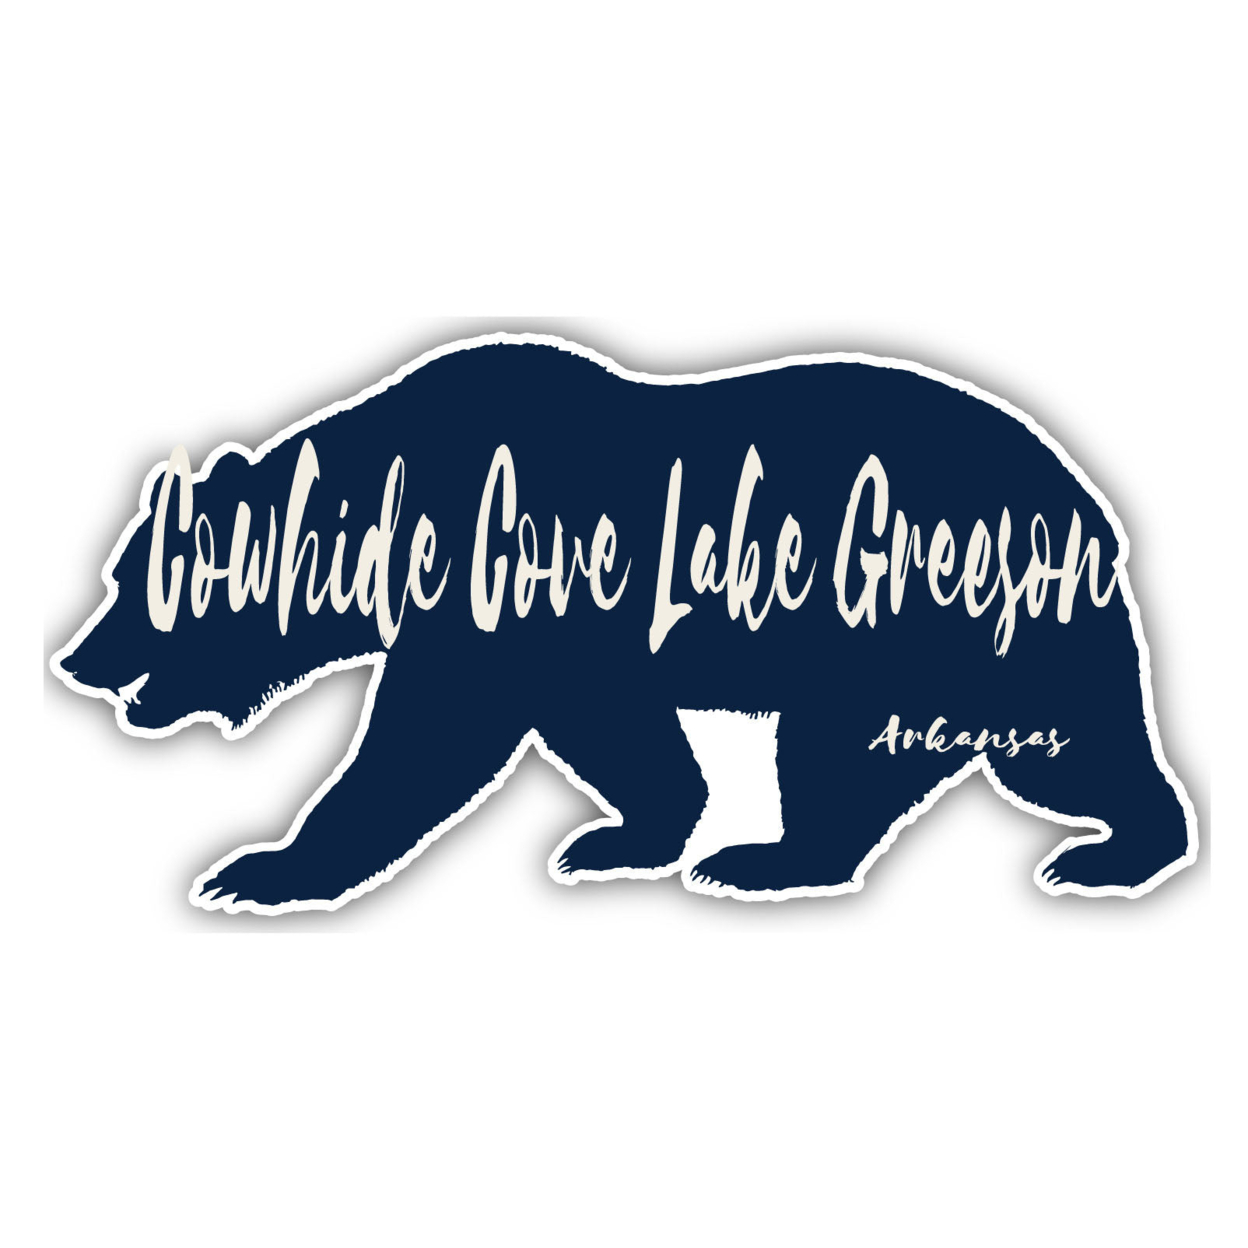 Cowhide Cove Lake Greeson Arkansas Souvenir Decorative Stickers (Choose Theme And Size) - 4-Pack, 8-Inch, Bear